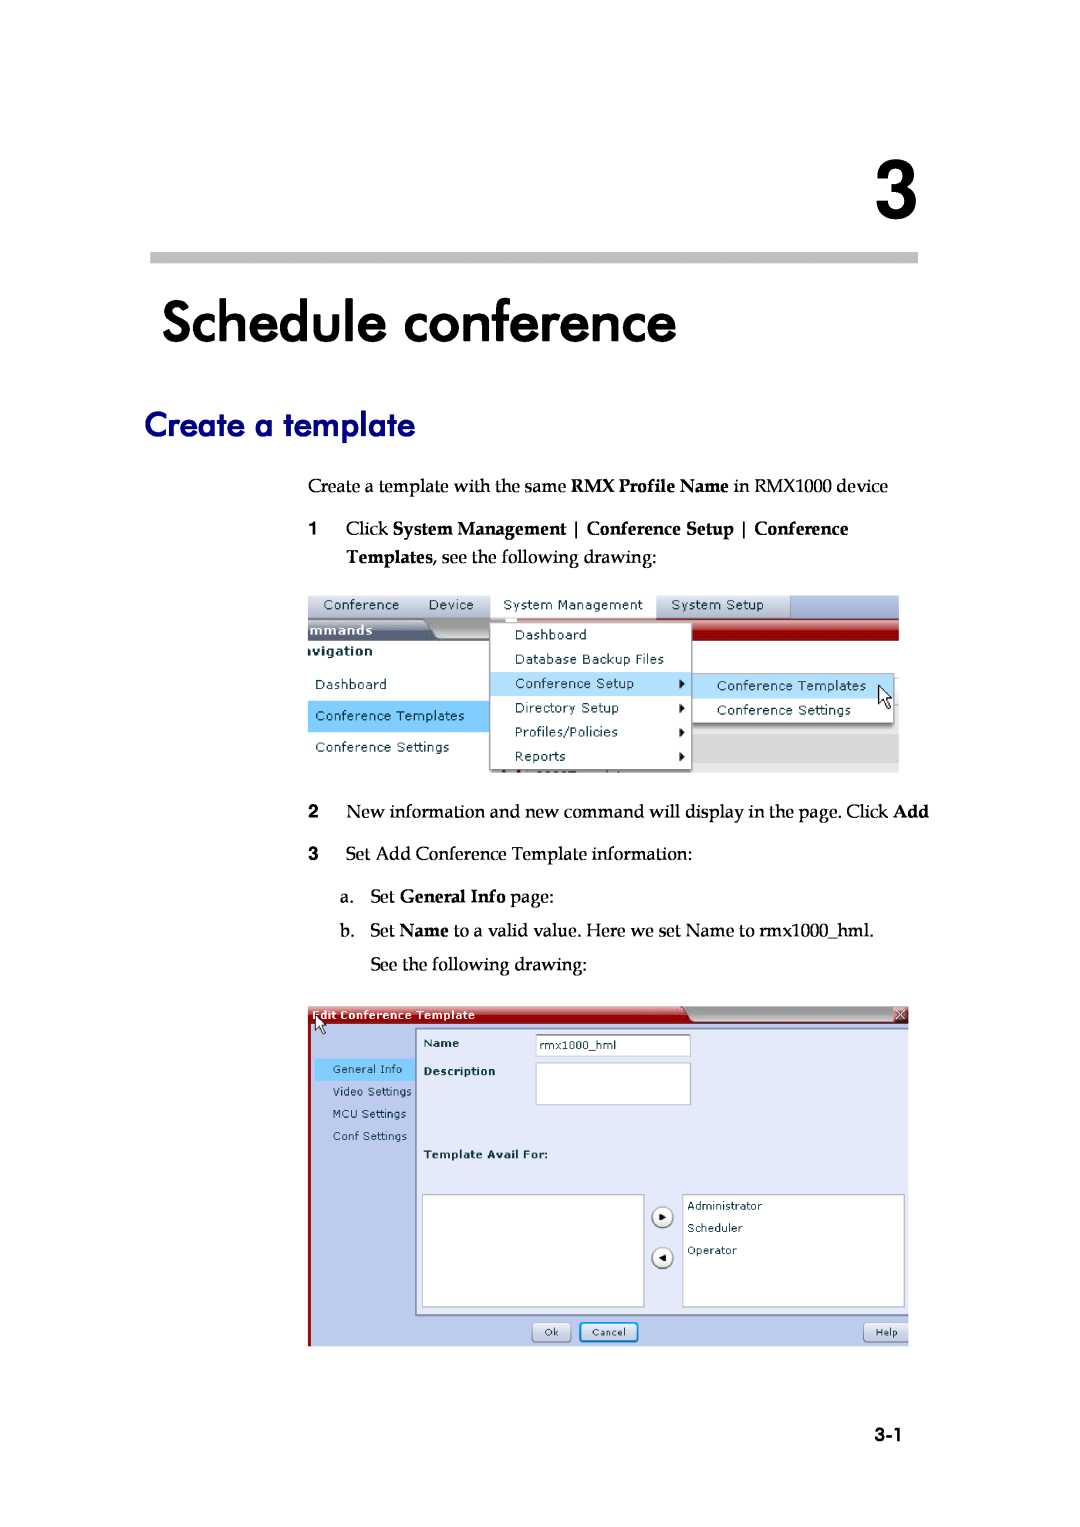 Polycom RMX 1000 V1.1.1, SE 200 V3.0.2/CMA manual Schedule conference, Create a template, a. Set General Info page 